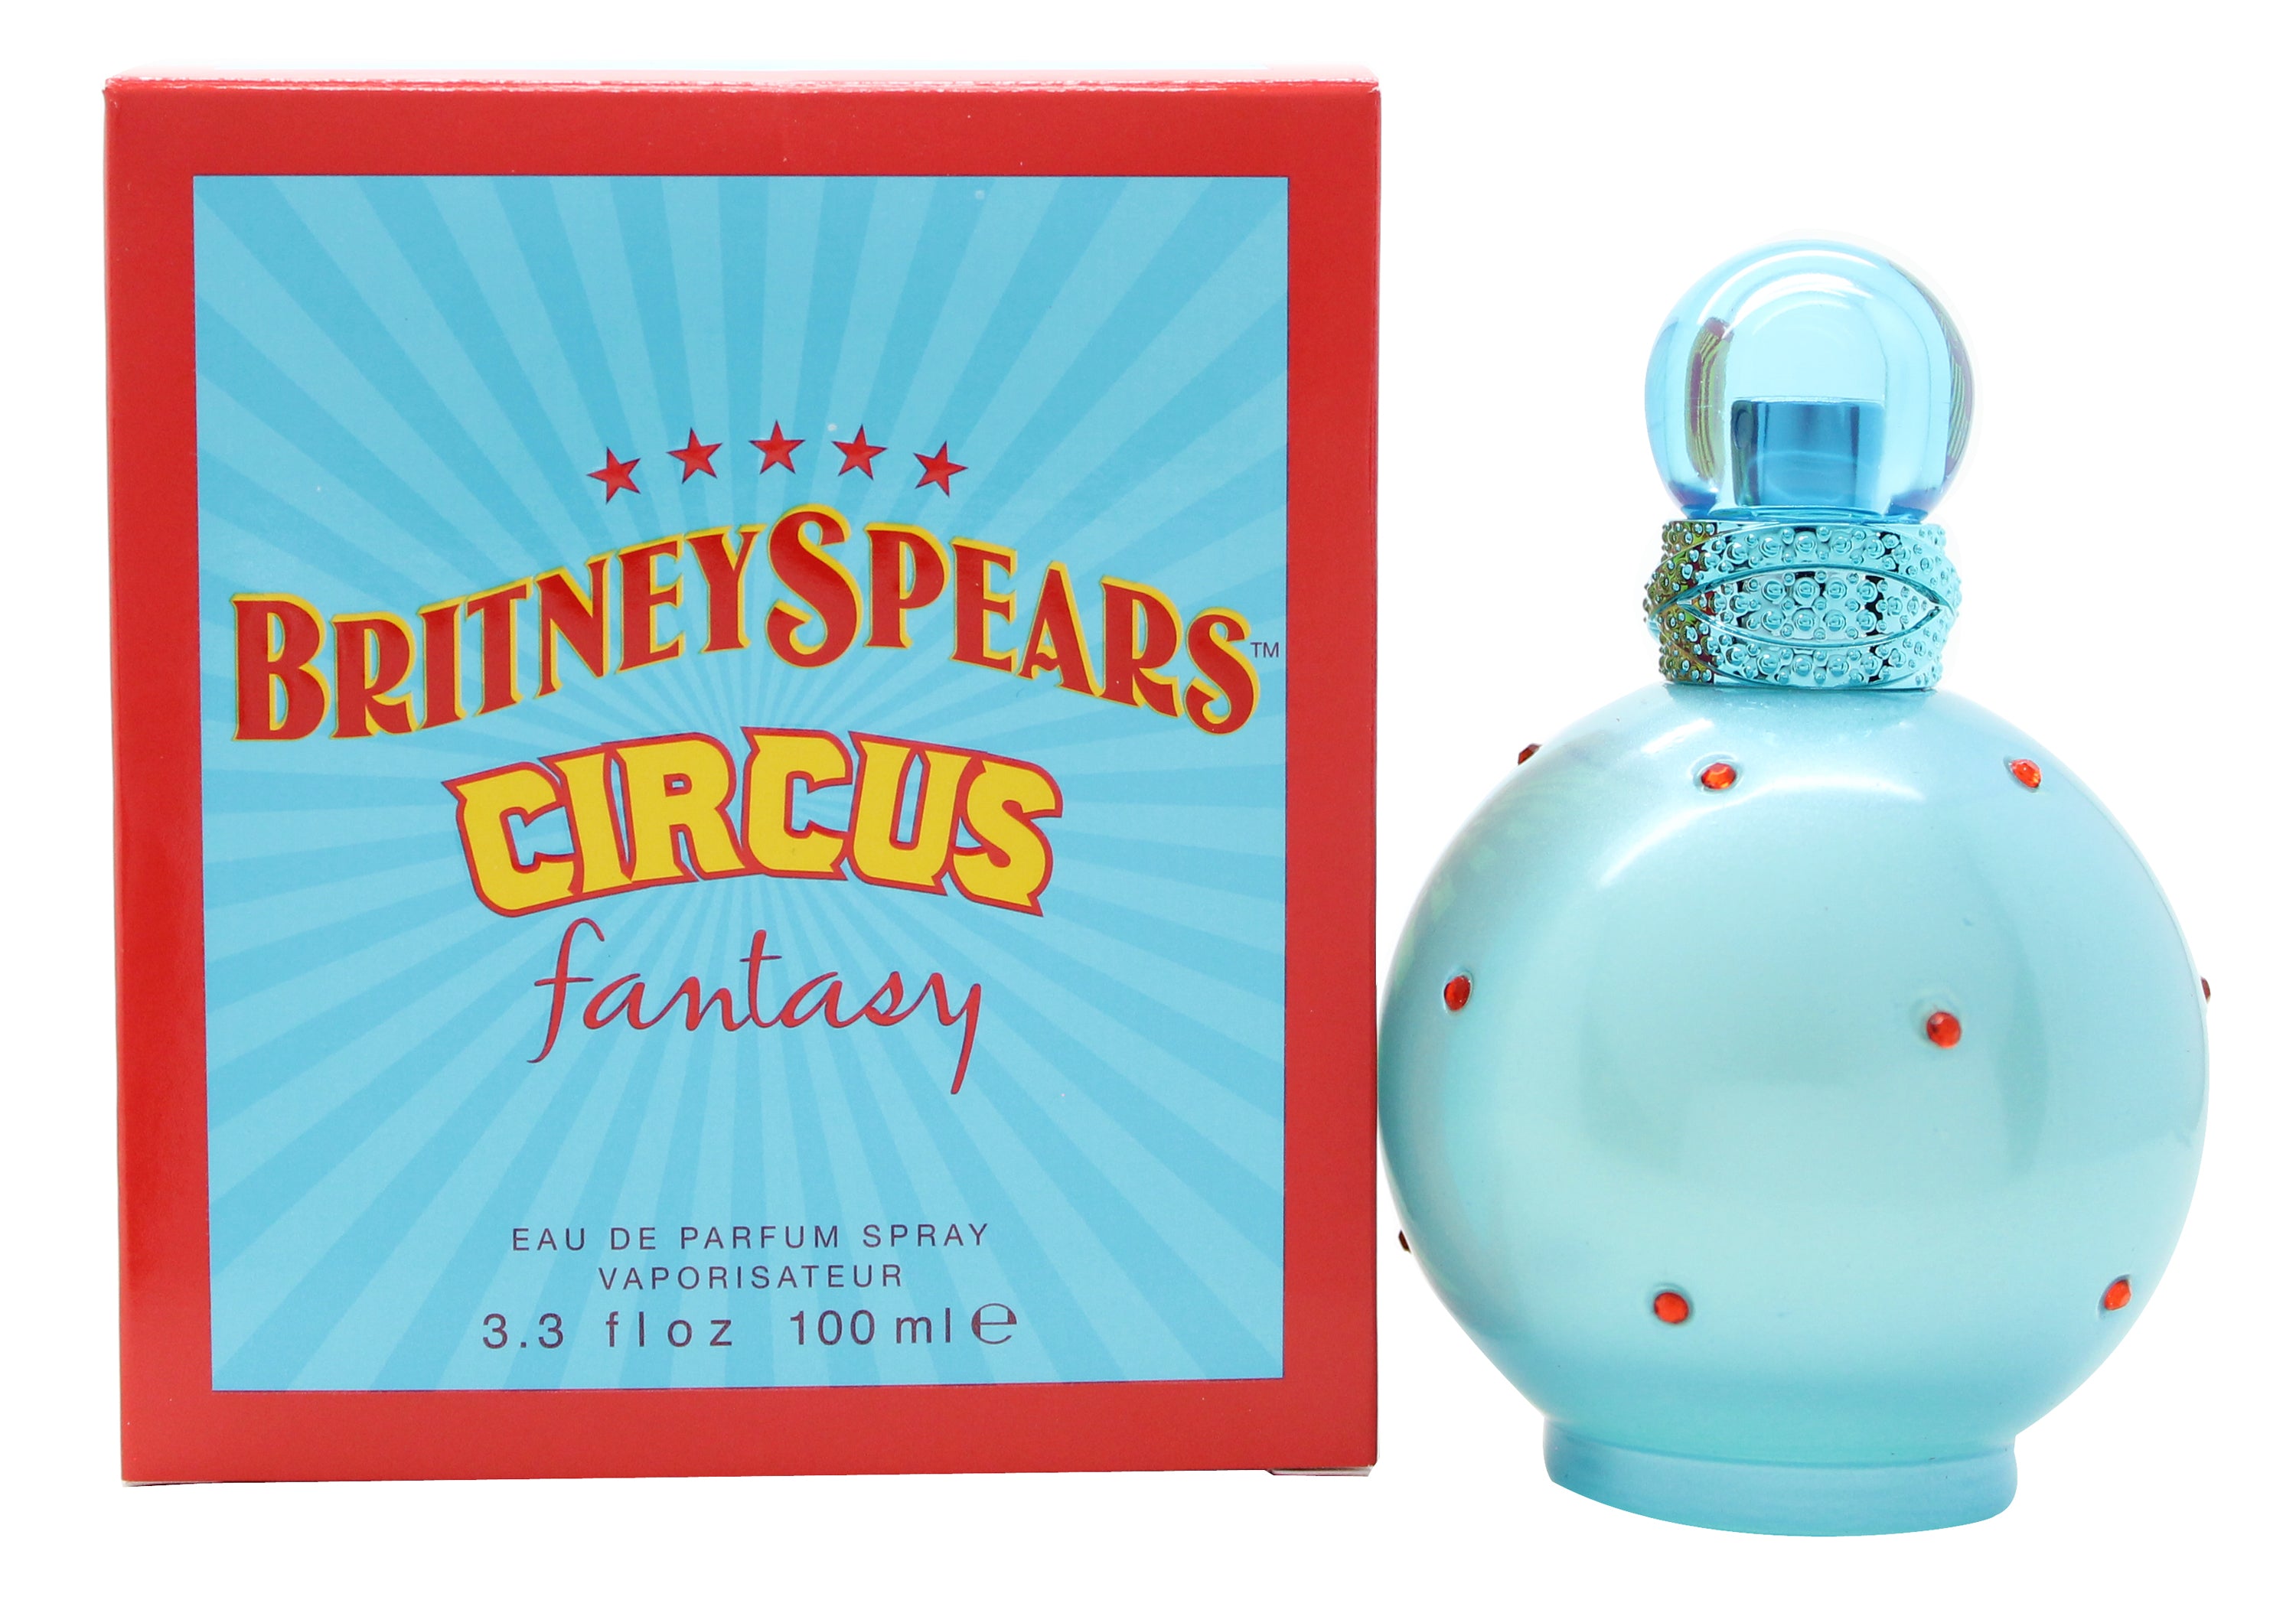 View Britney Spears Circus Fantasy Eau de Parfum 100ml Spray information